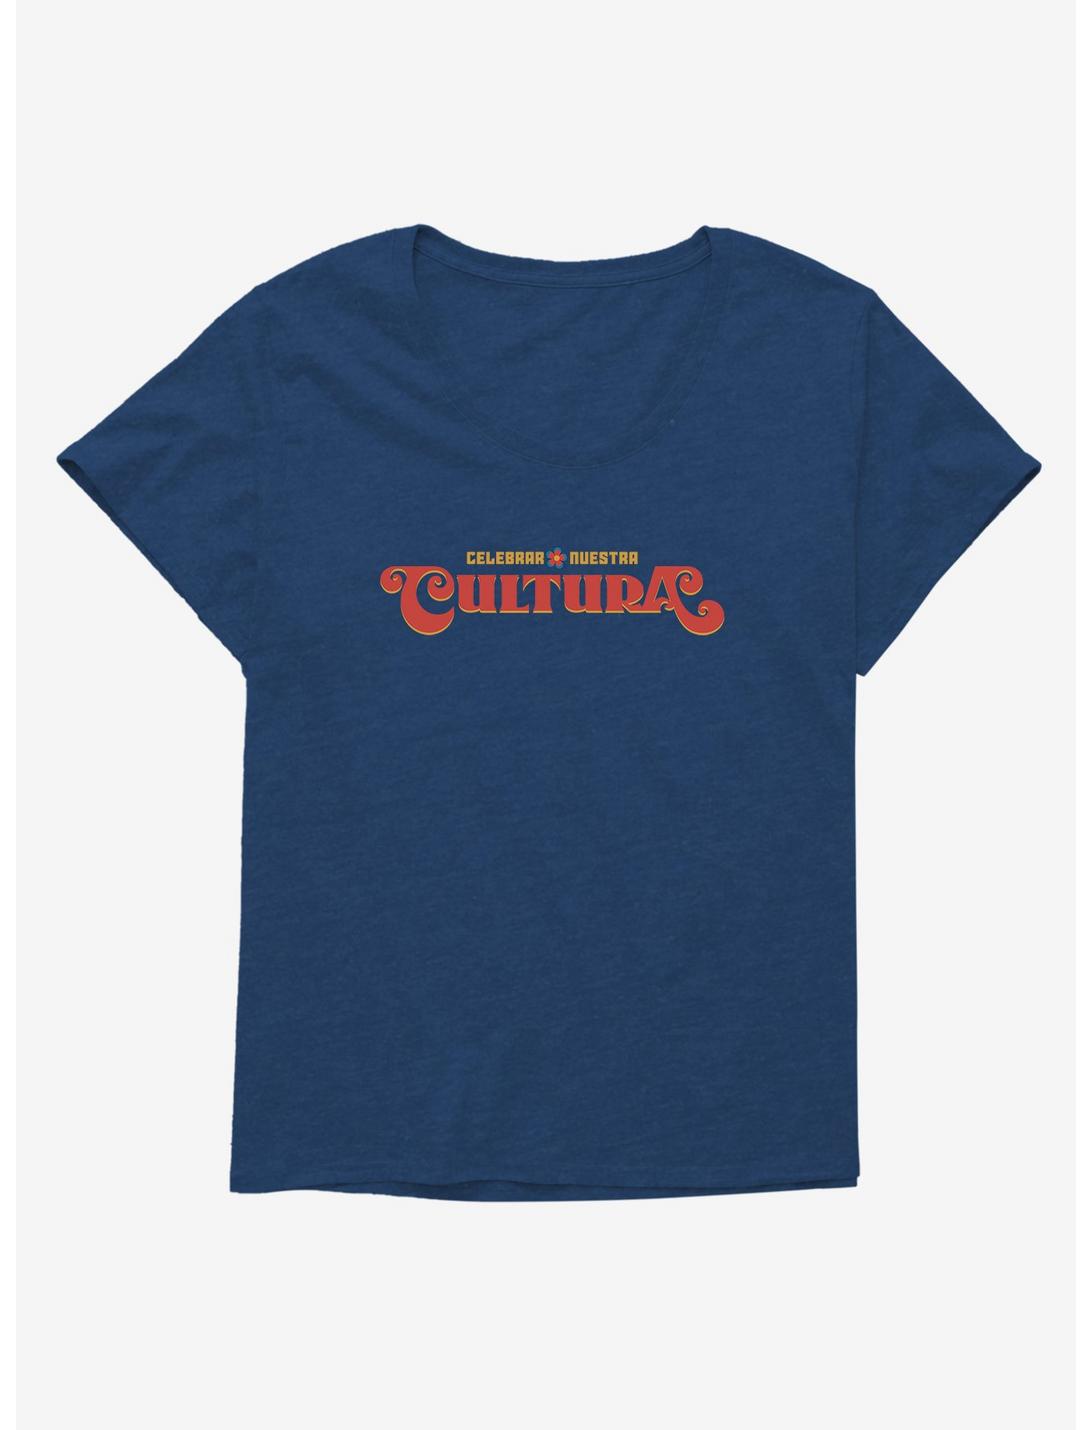 Celebrar Nuestra Cultura Girls T-Shirt Plus Size, , hi-res